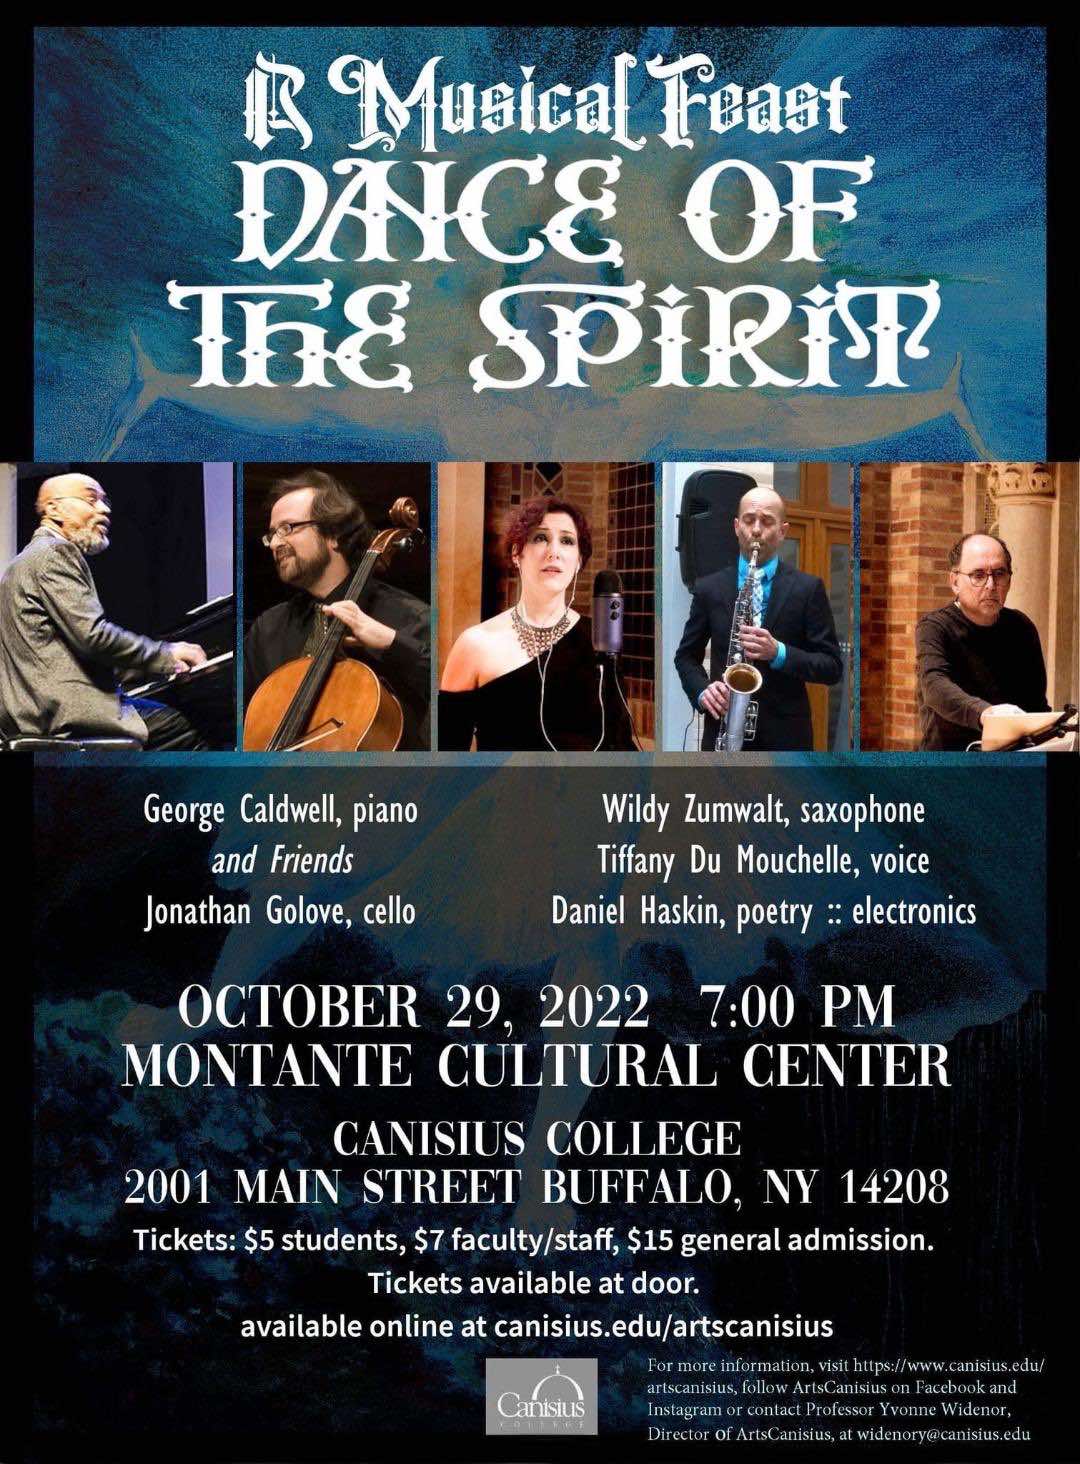 Irene Haupt, Dan Haskin Invite You to Dance of the Spirit at Montante Center